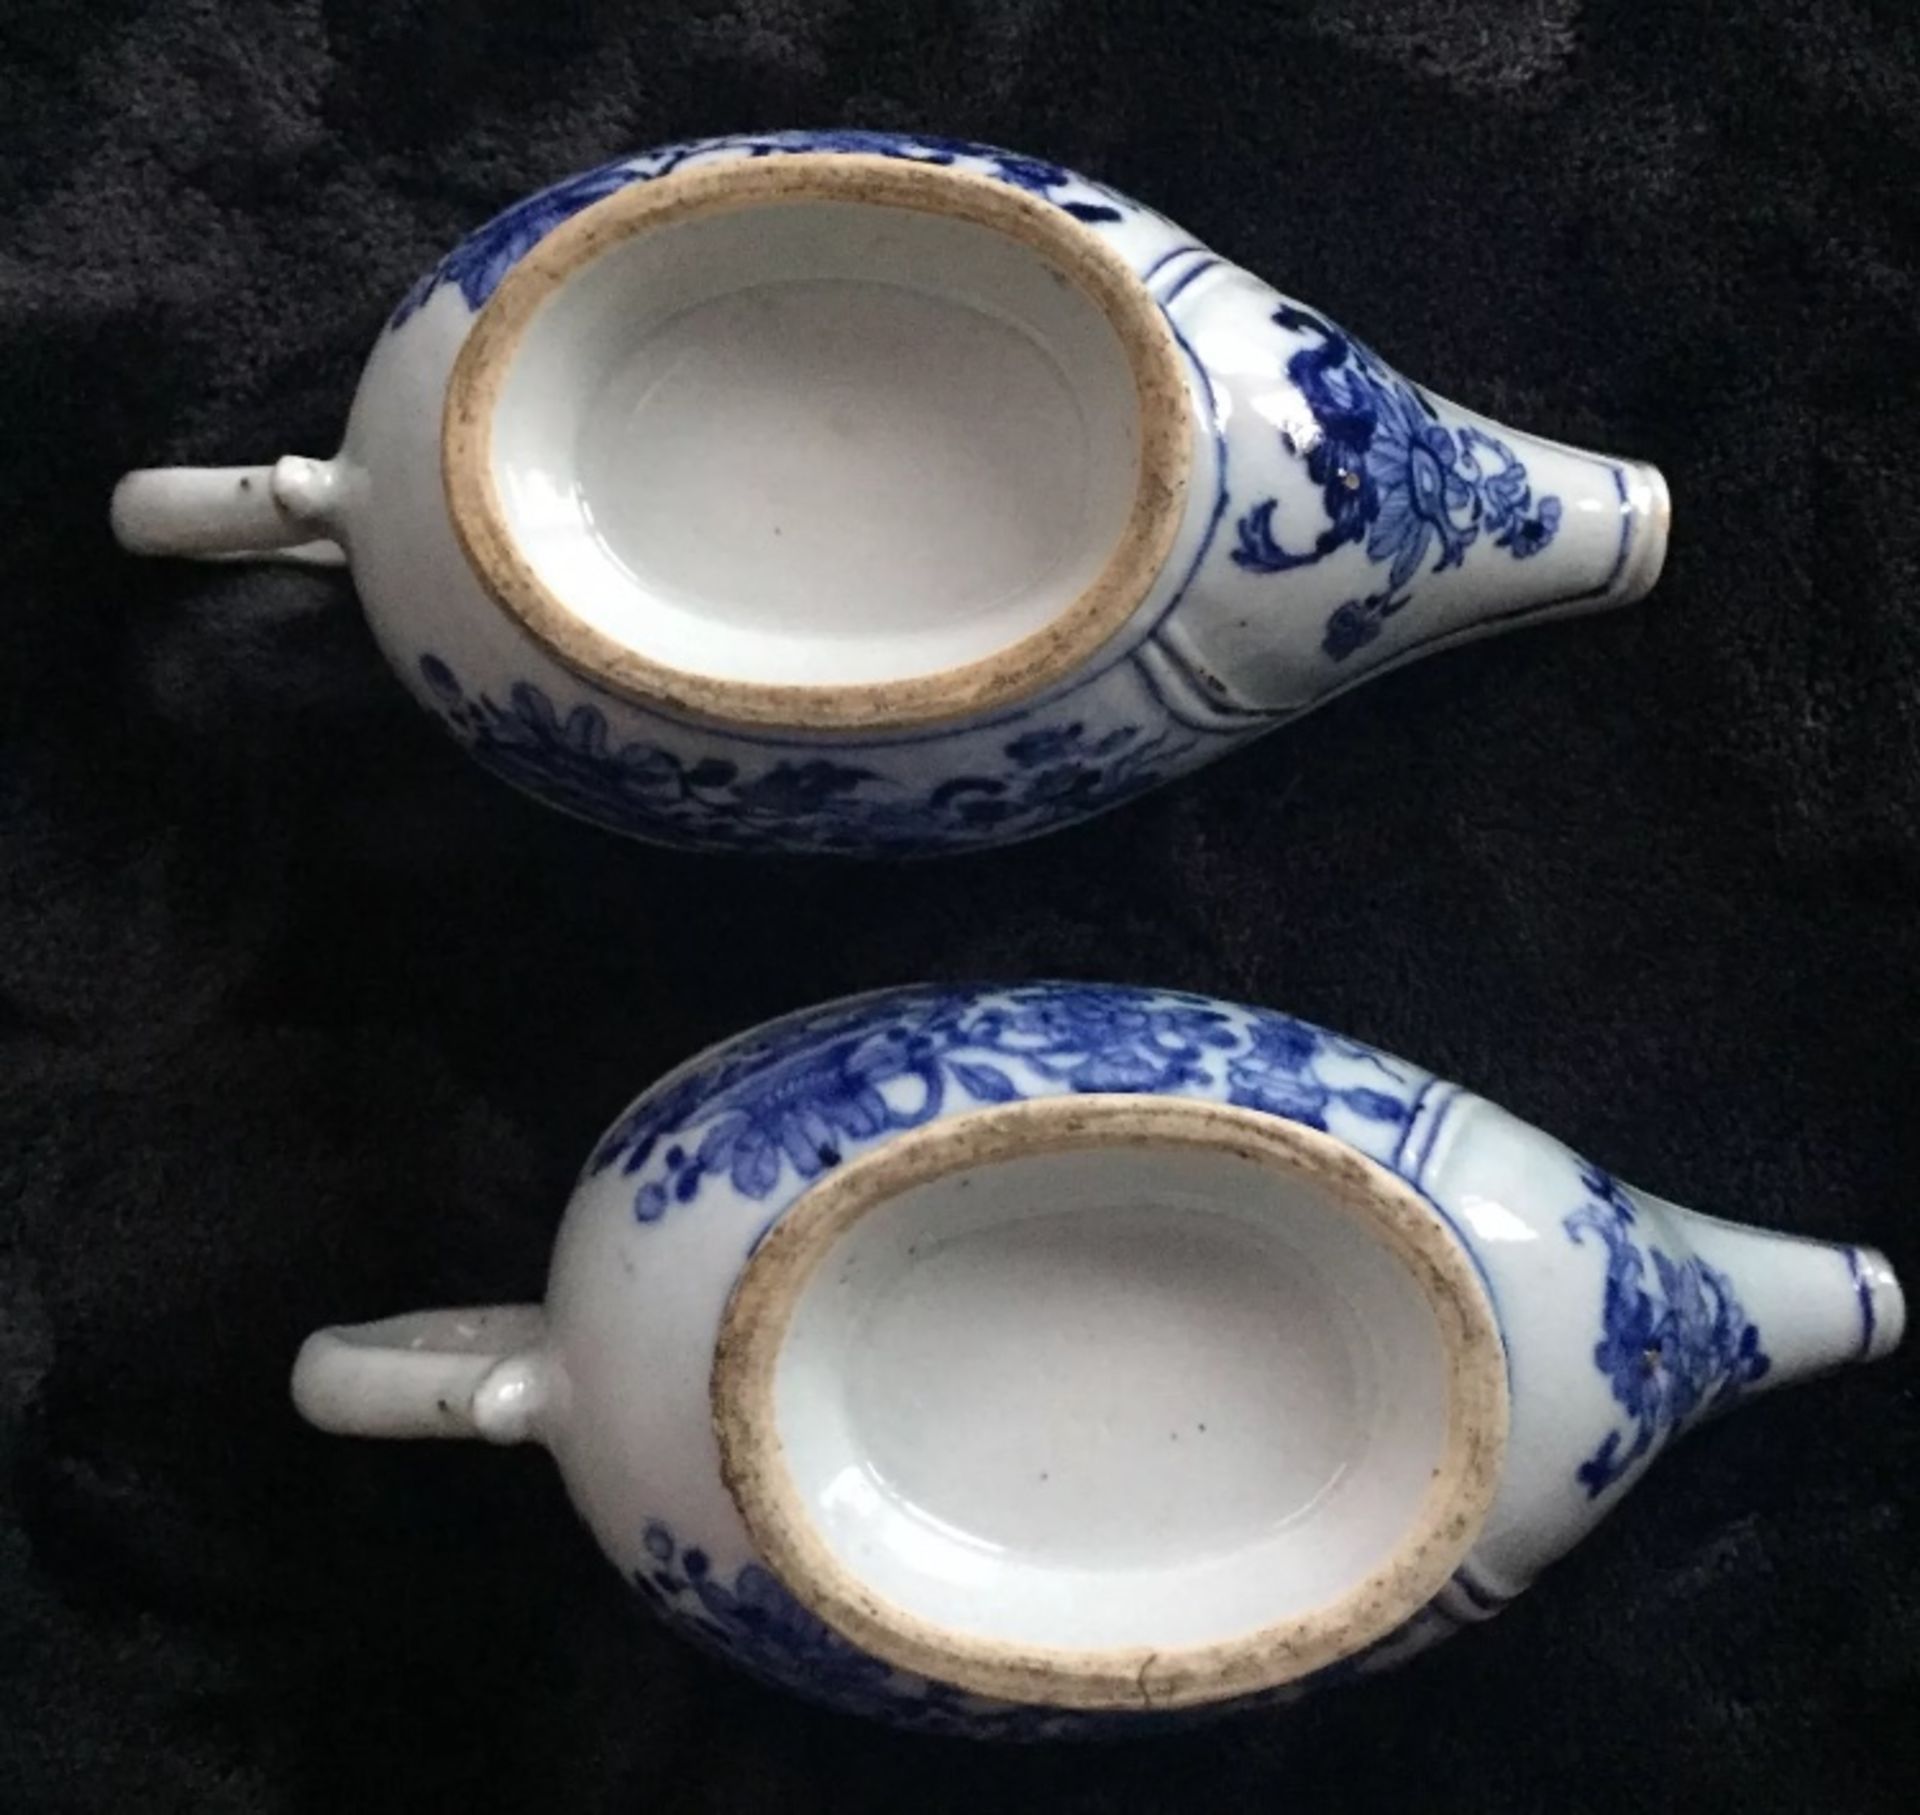 Rare pair of antique Chinese porcelain sauceboats, Circa 1750 (Qianlong period) - Image 4 of 20